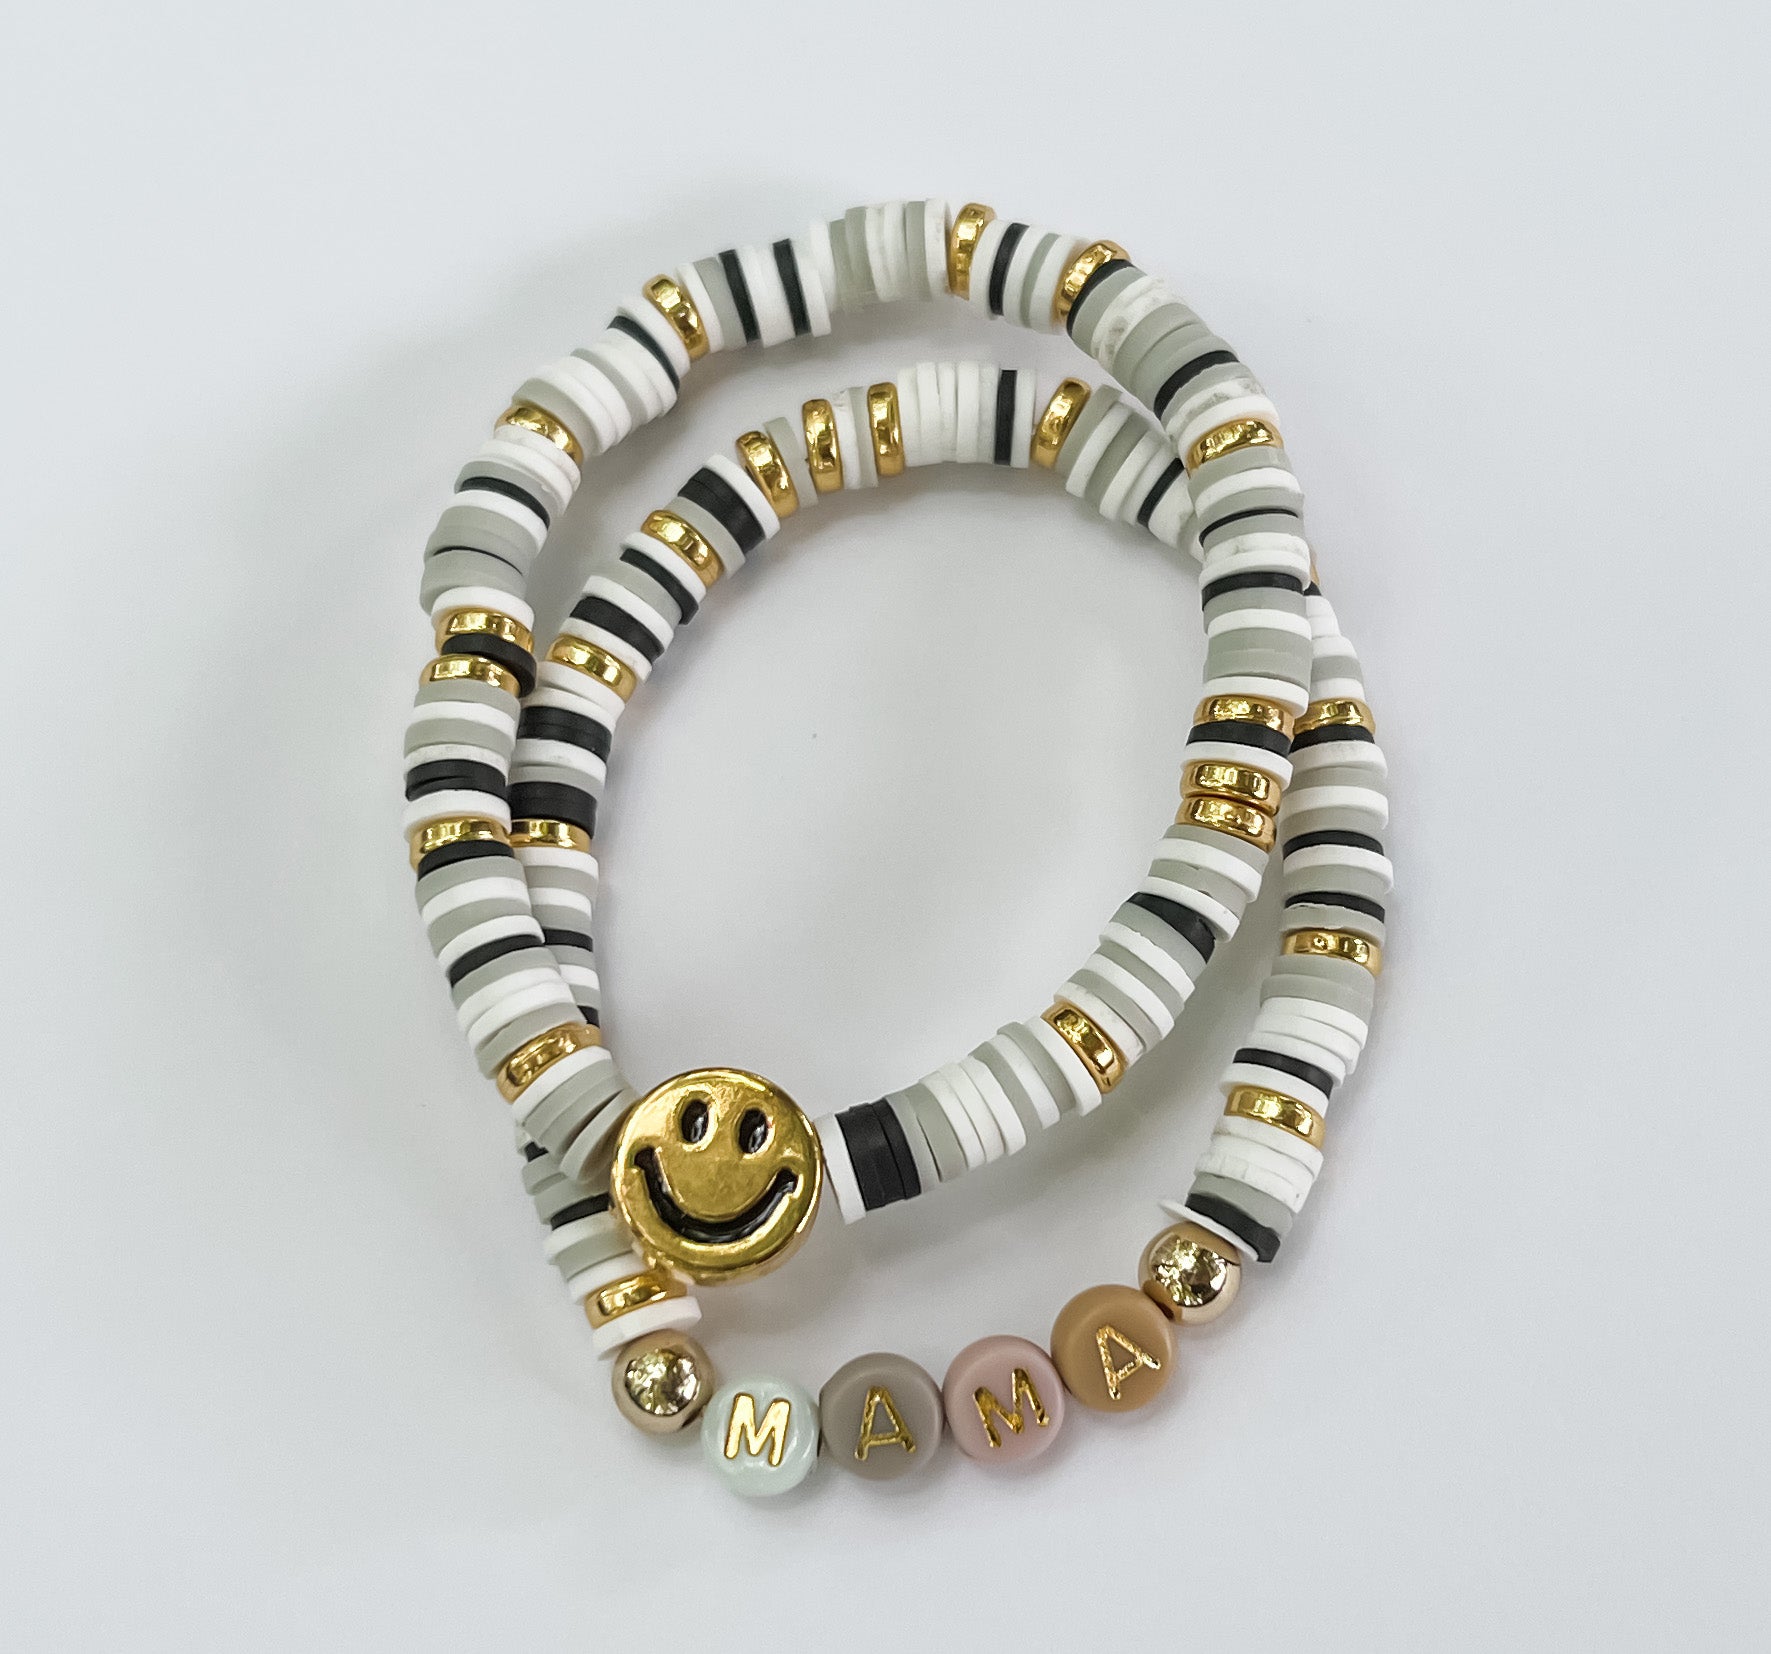 Baseball Beads Jewelry Making, Polymer Handmade Supplies